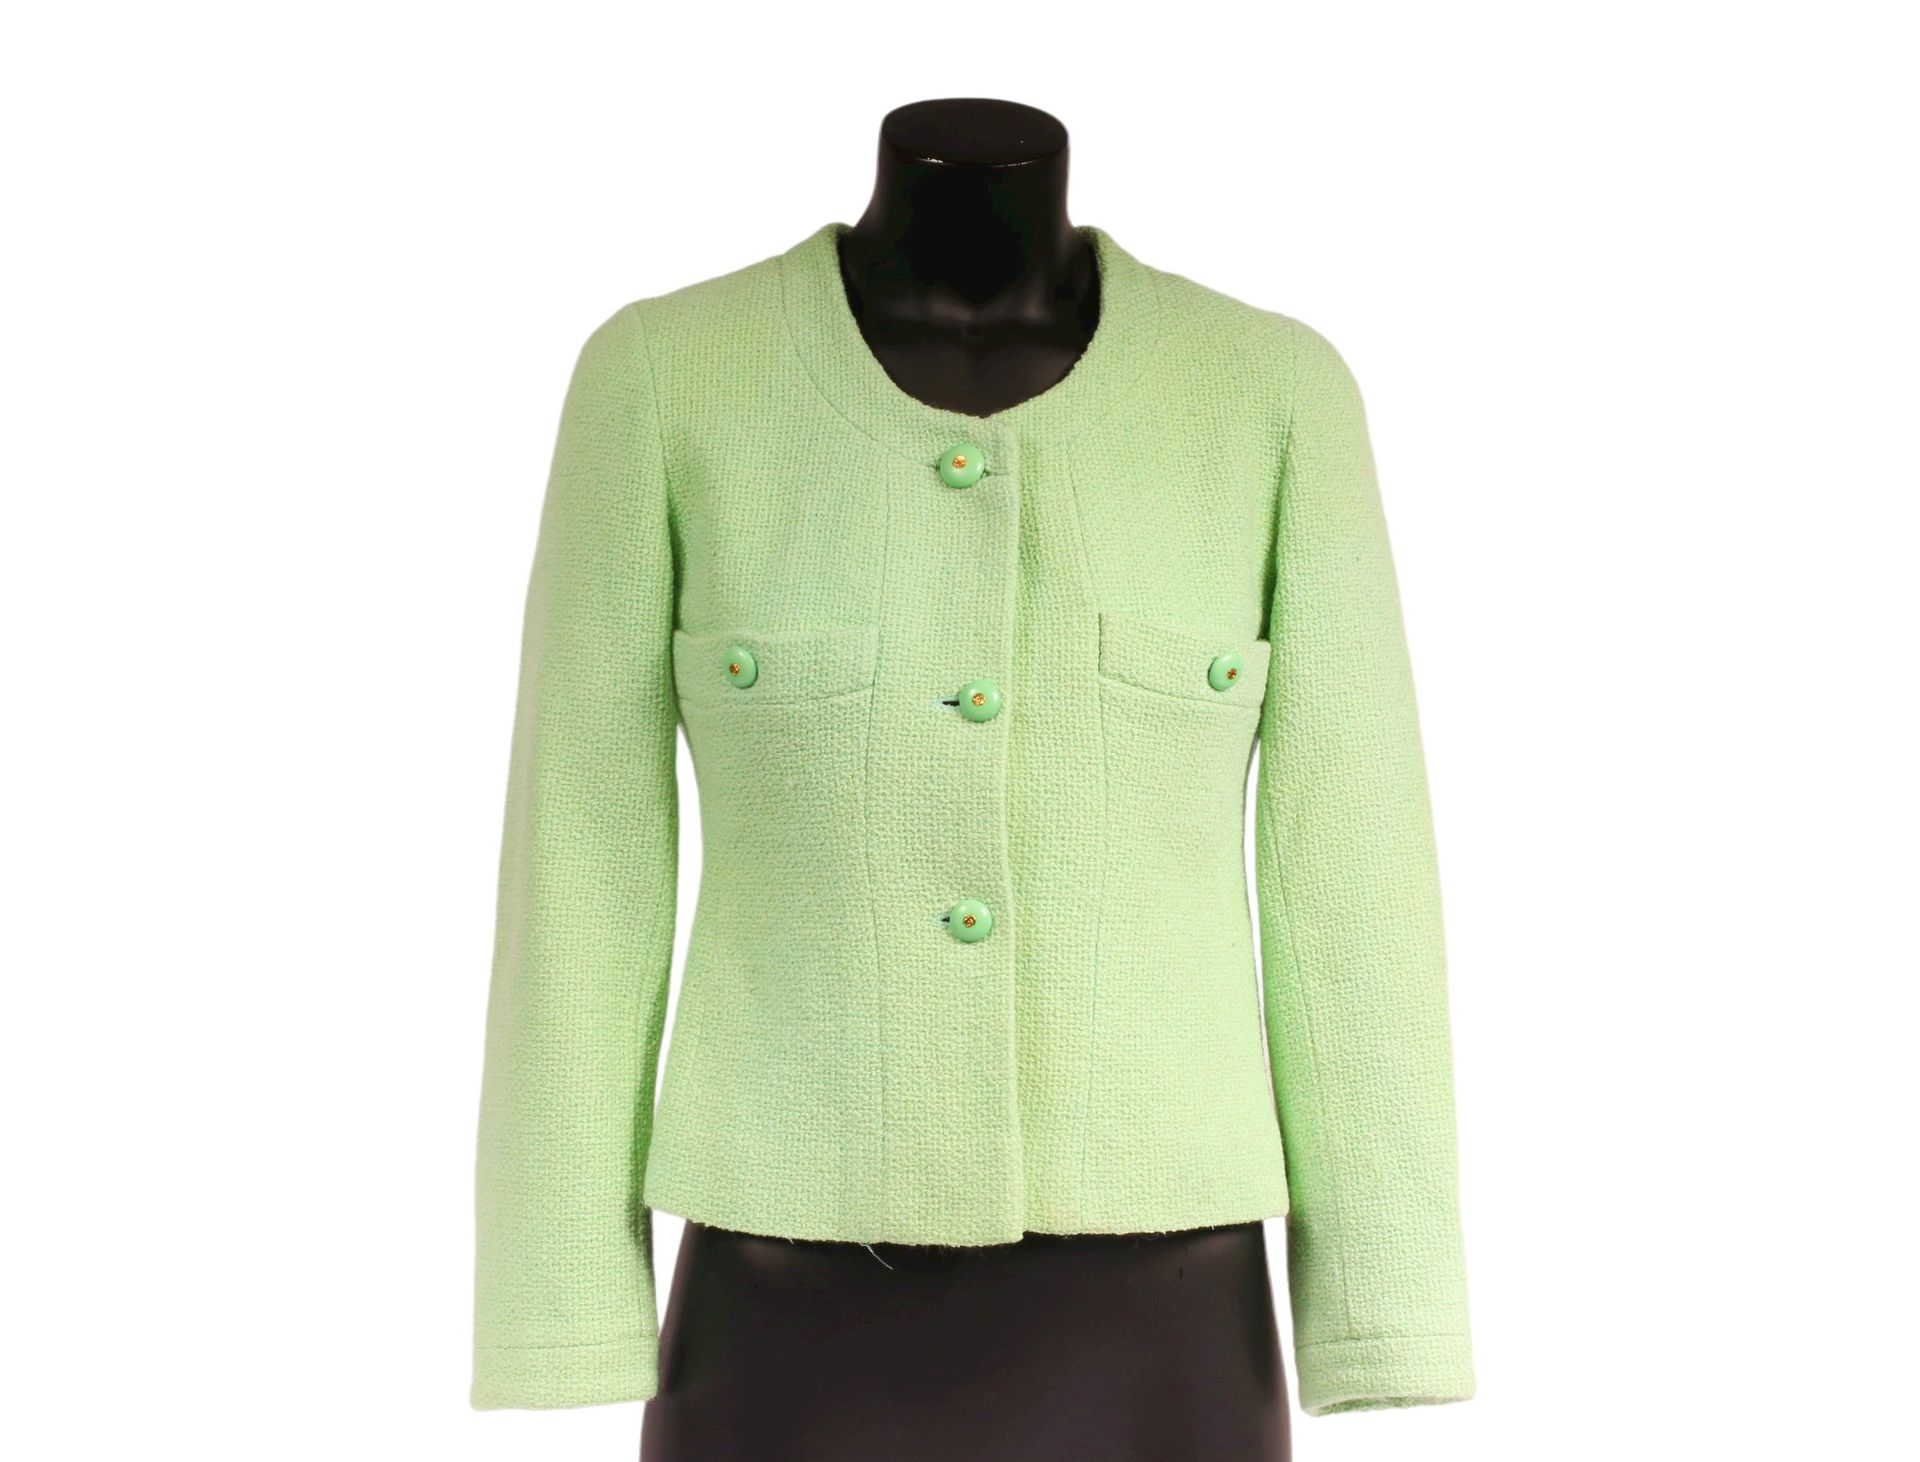 Null * CHANEL BOUTIQUE

Circa 1990 - 1995

Kurze Jacke aus mandelgrünem Tweed. 
&hellip;